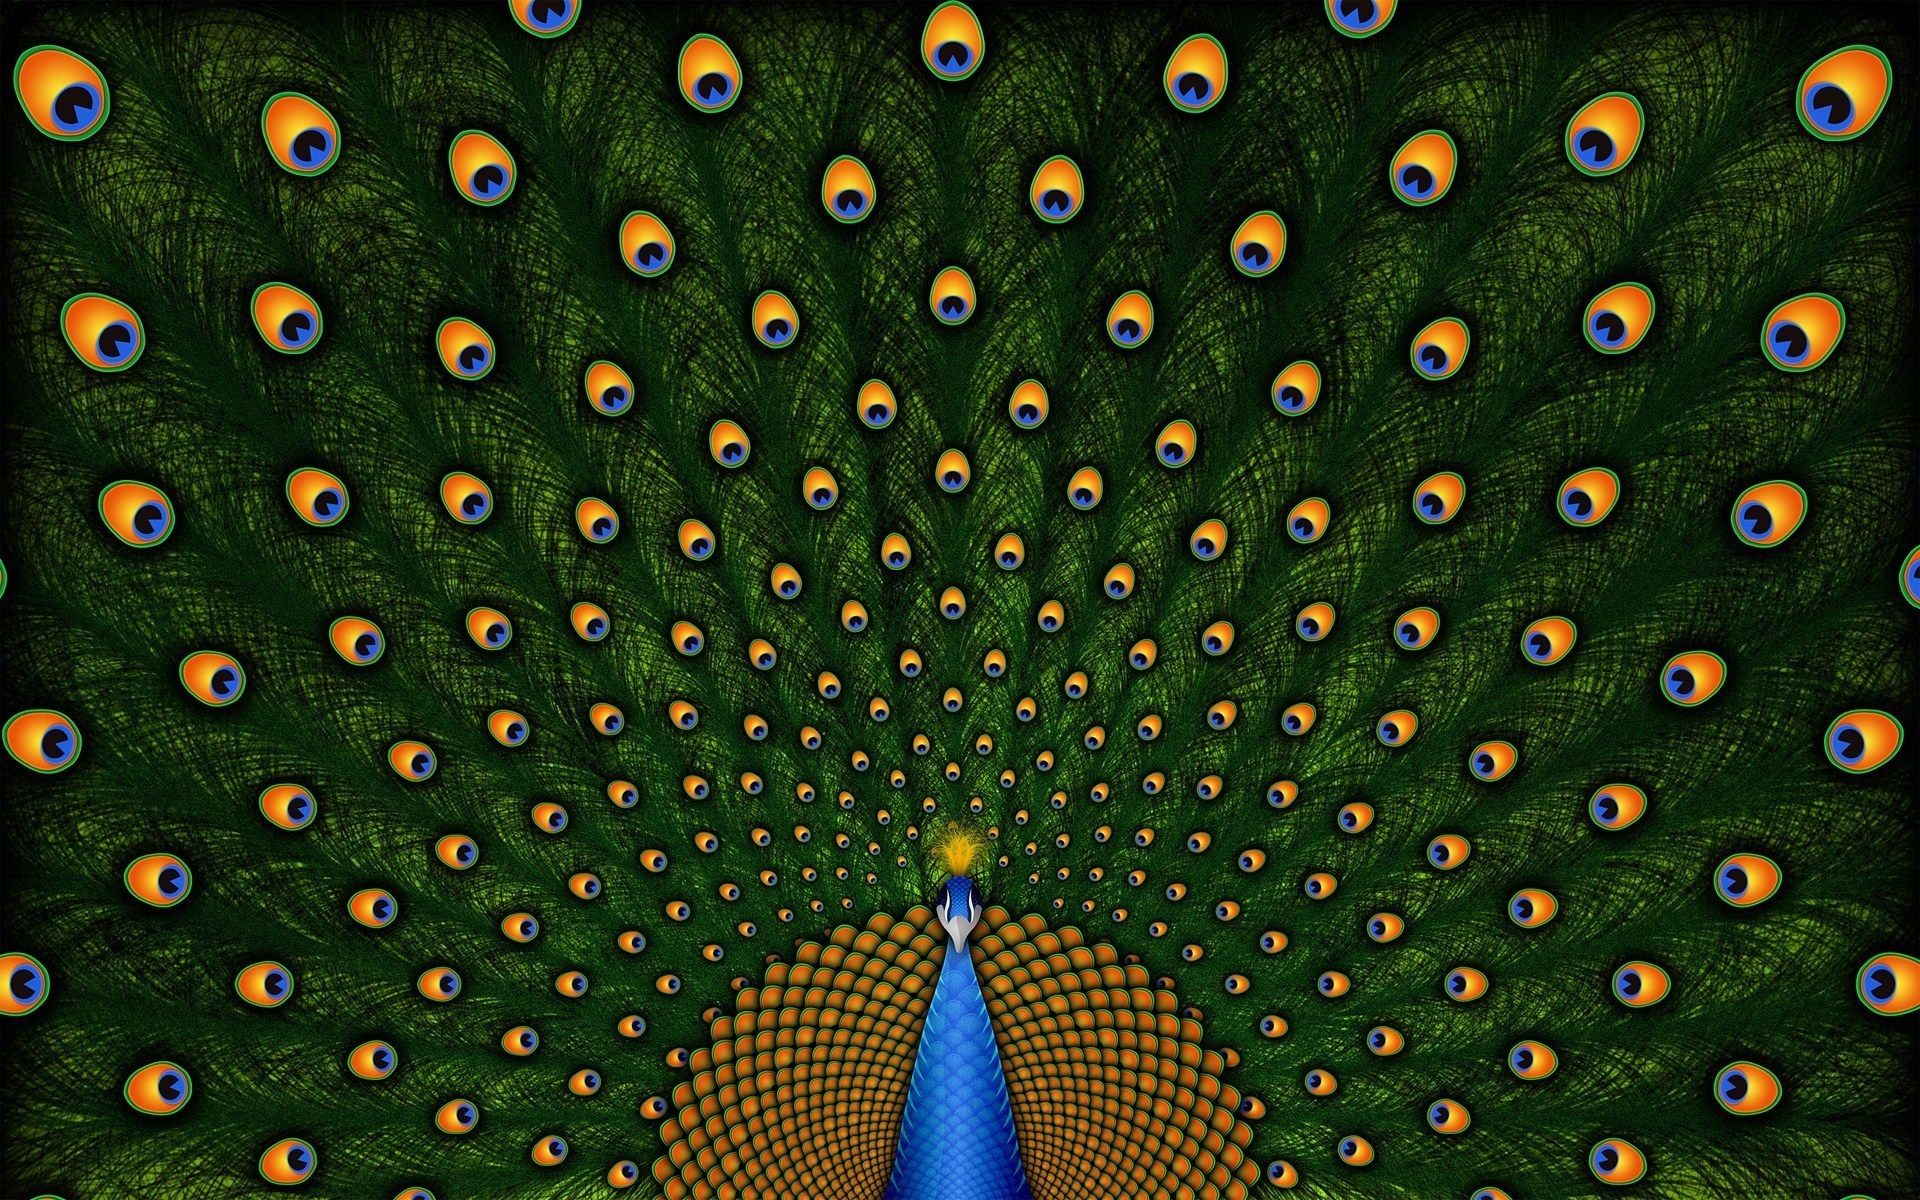 peacocks, Birds, Feathers, Colors, Pattern, Spots, Texture, Bokeh, Art Wallpaper